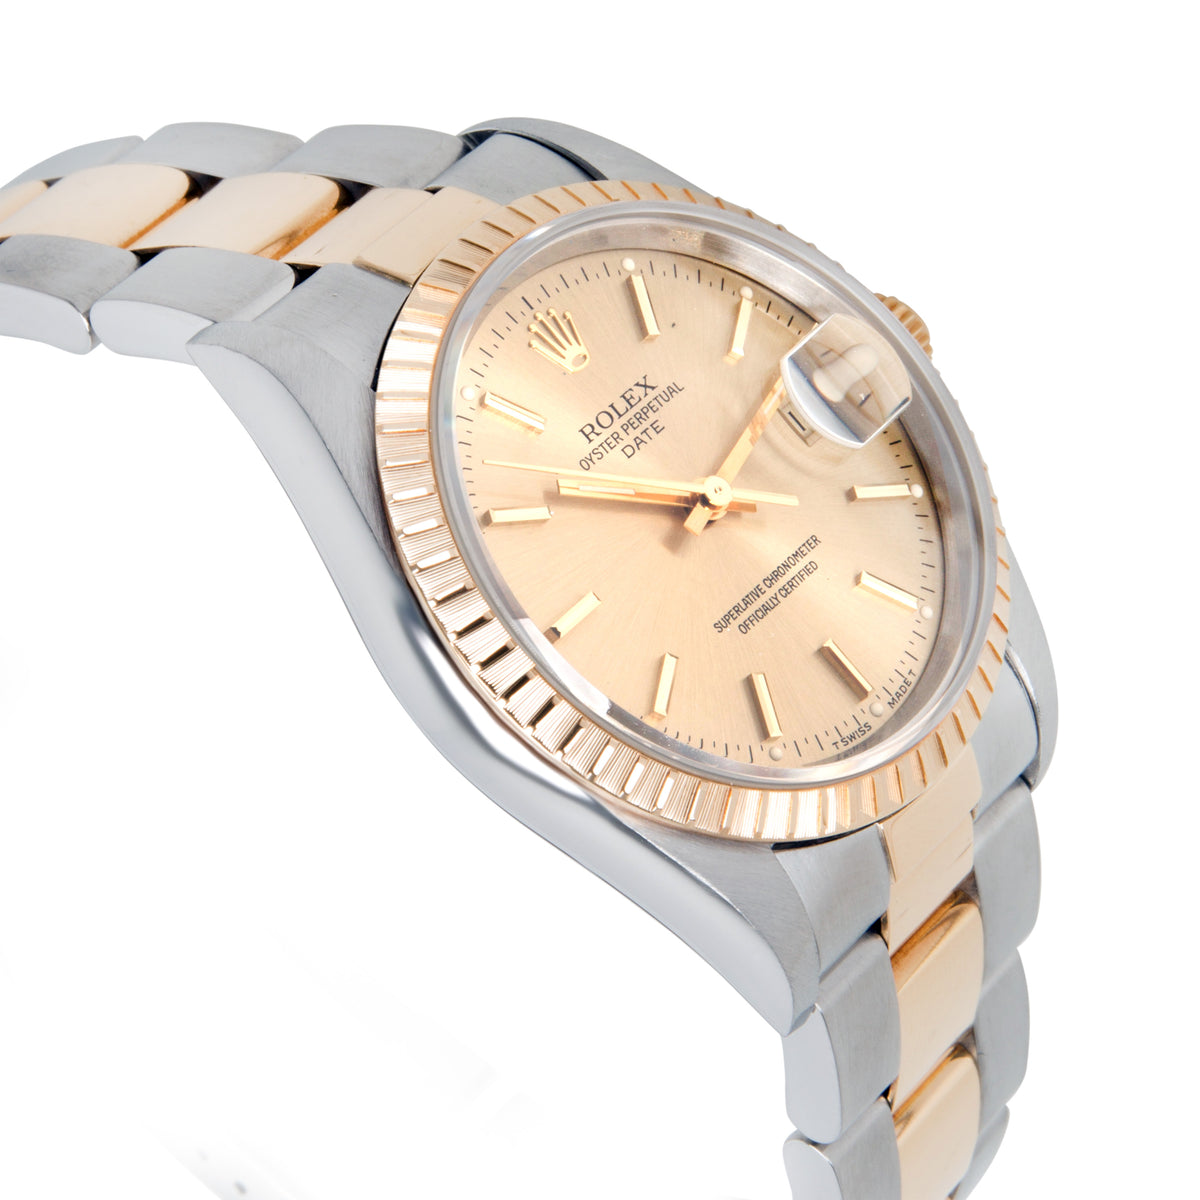 Rolex Date 15223 Men's Watch in 18kt Yellow Gold/Steel